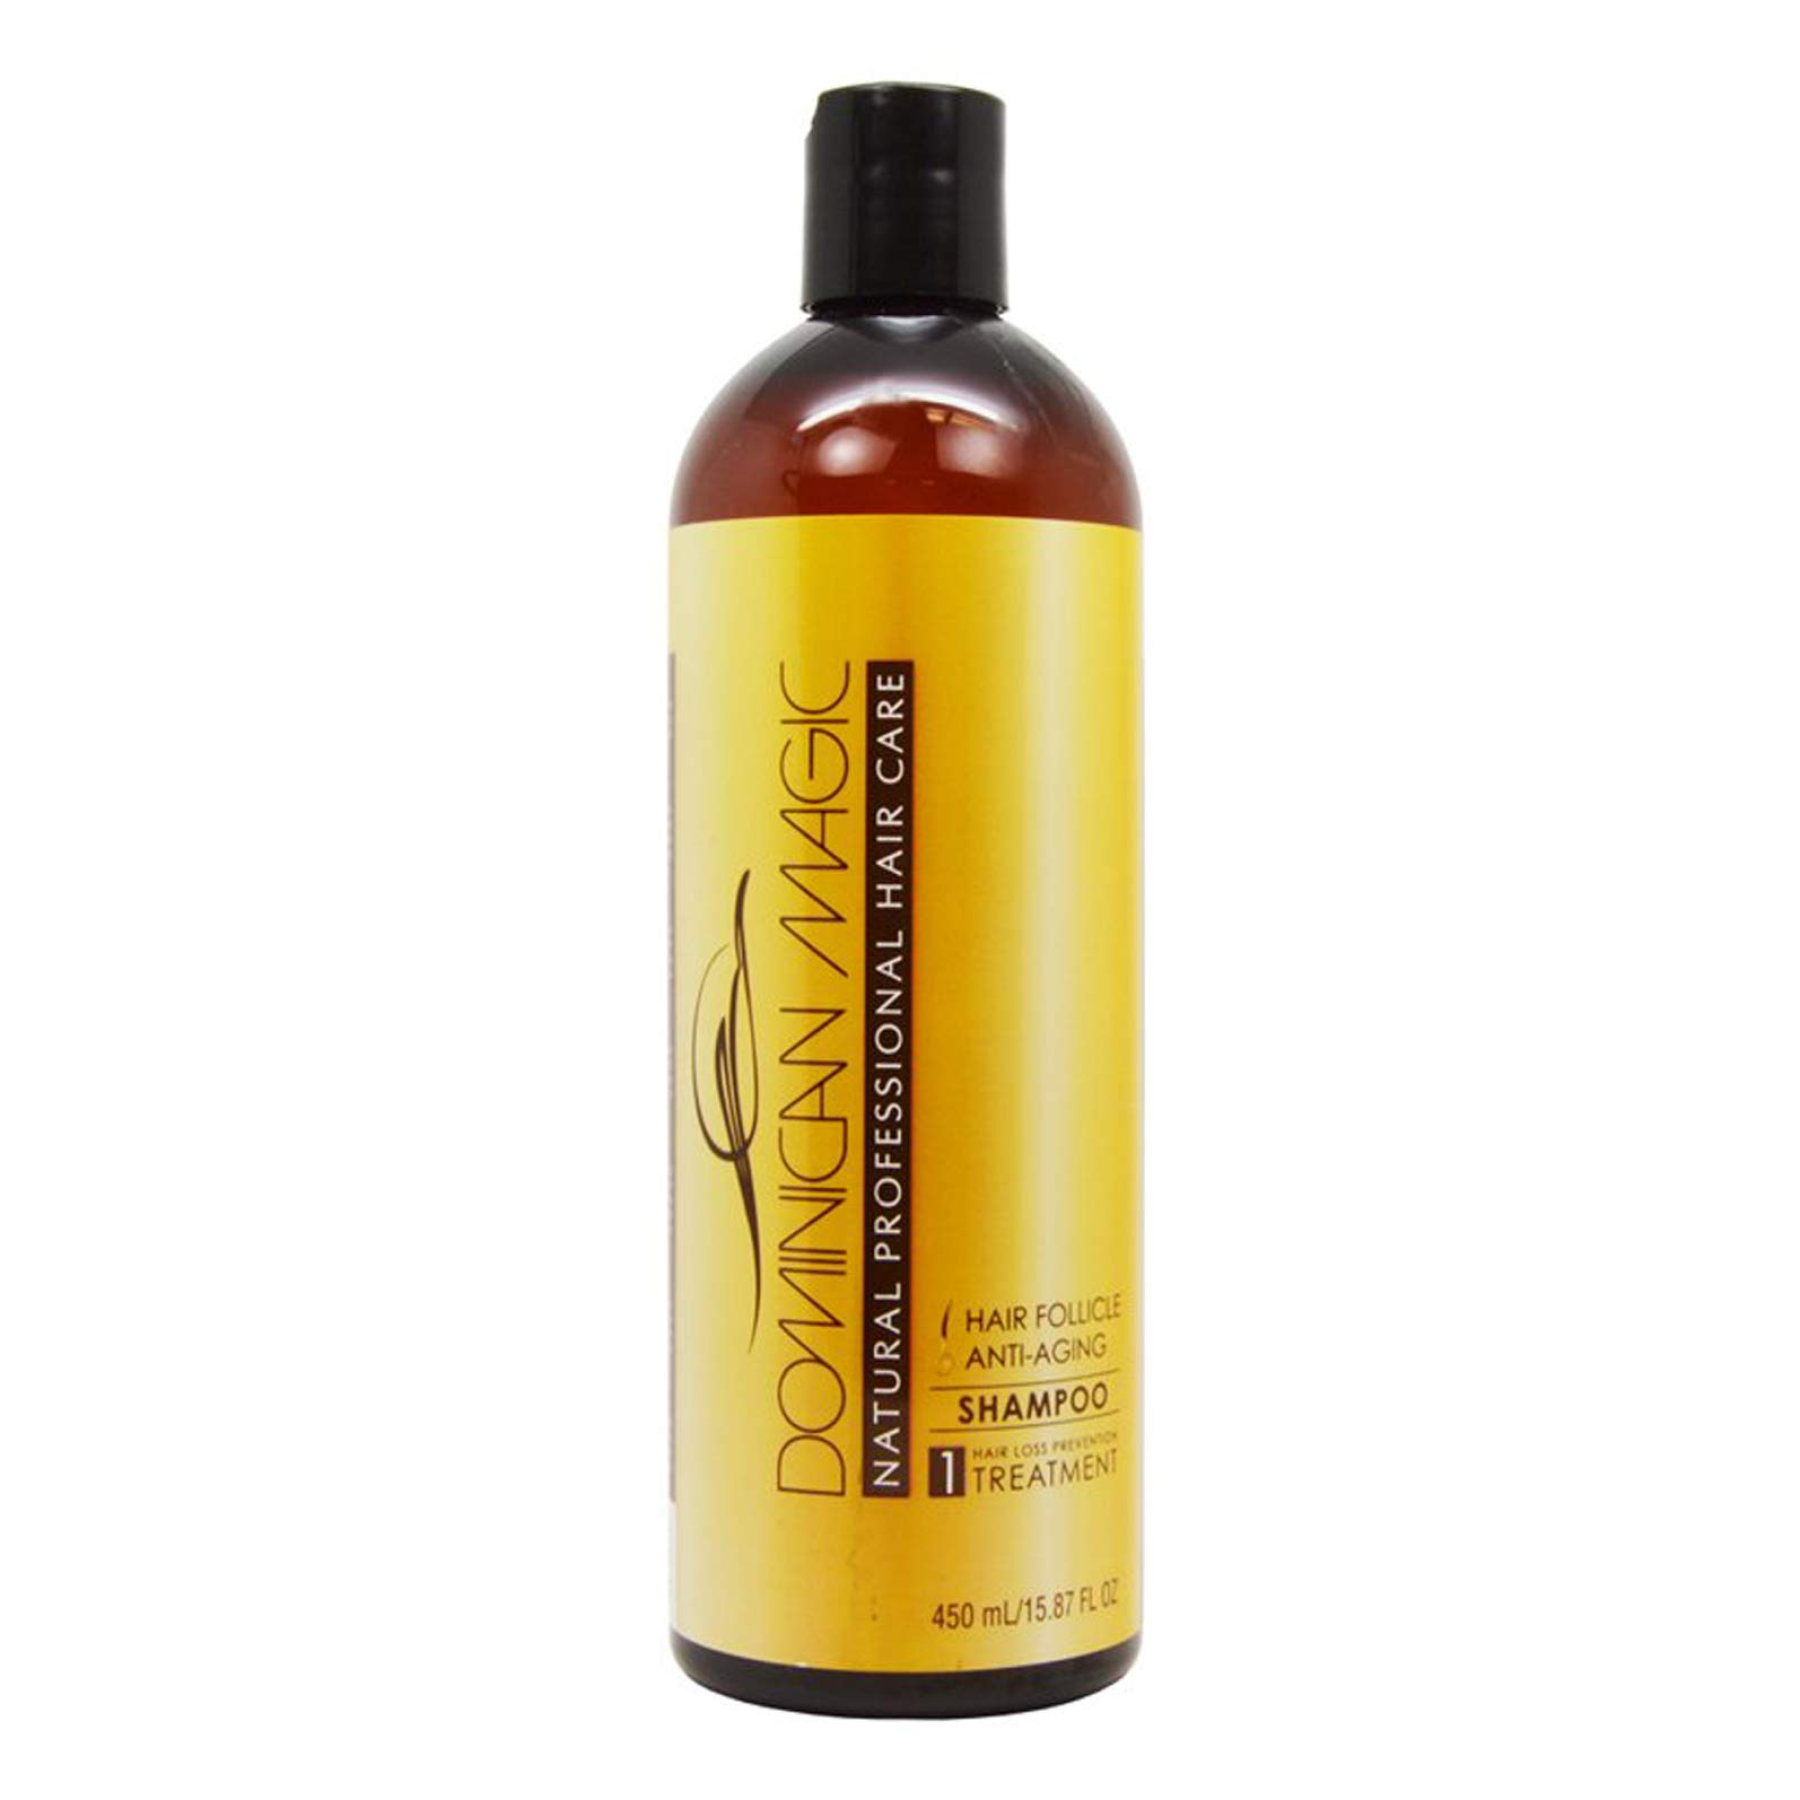 Dominican Magic Anti-Aging Shampoo 15.87 oz